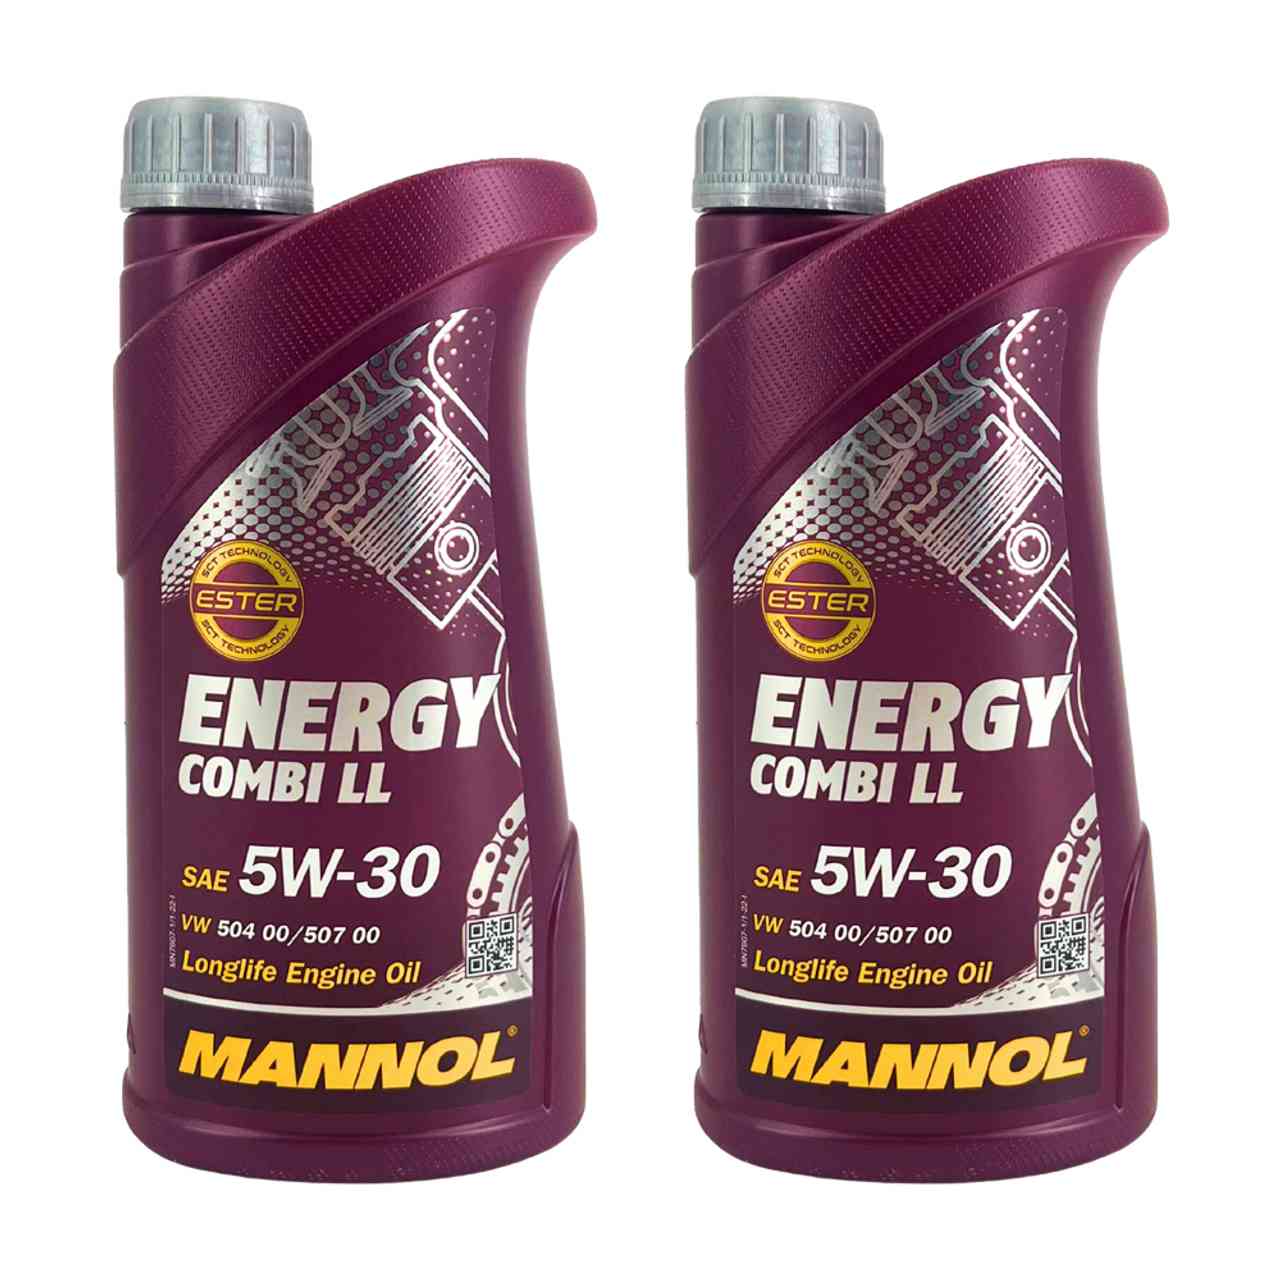 Mannol Energy Combi LL 5W-30 2x1 Liter